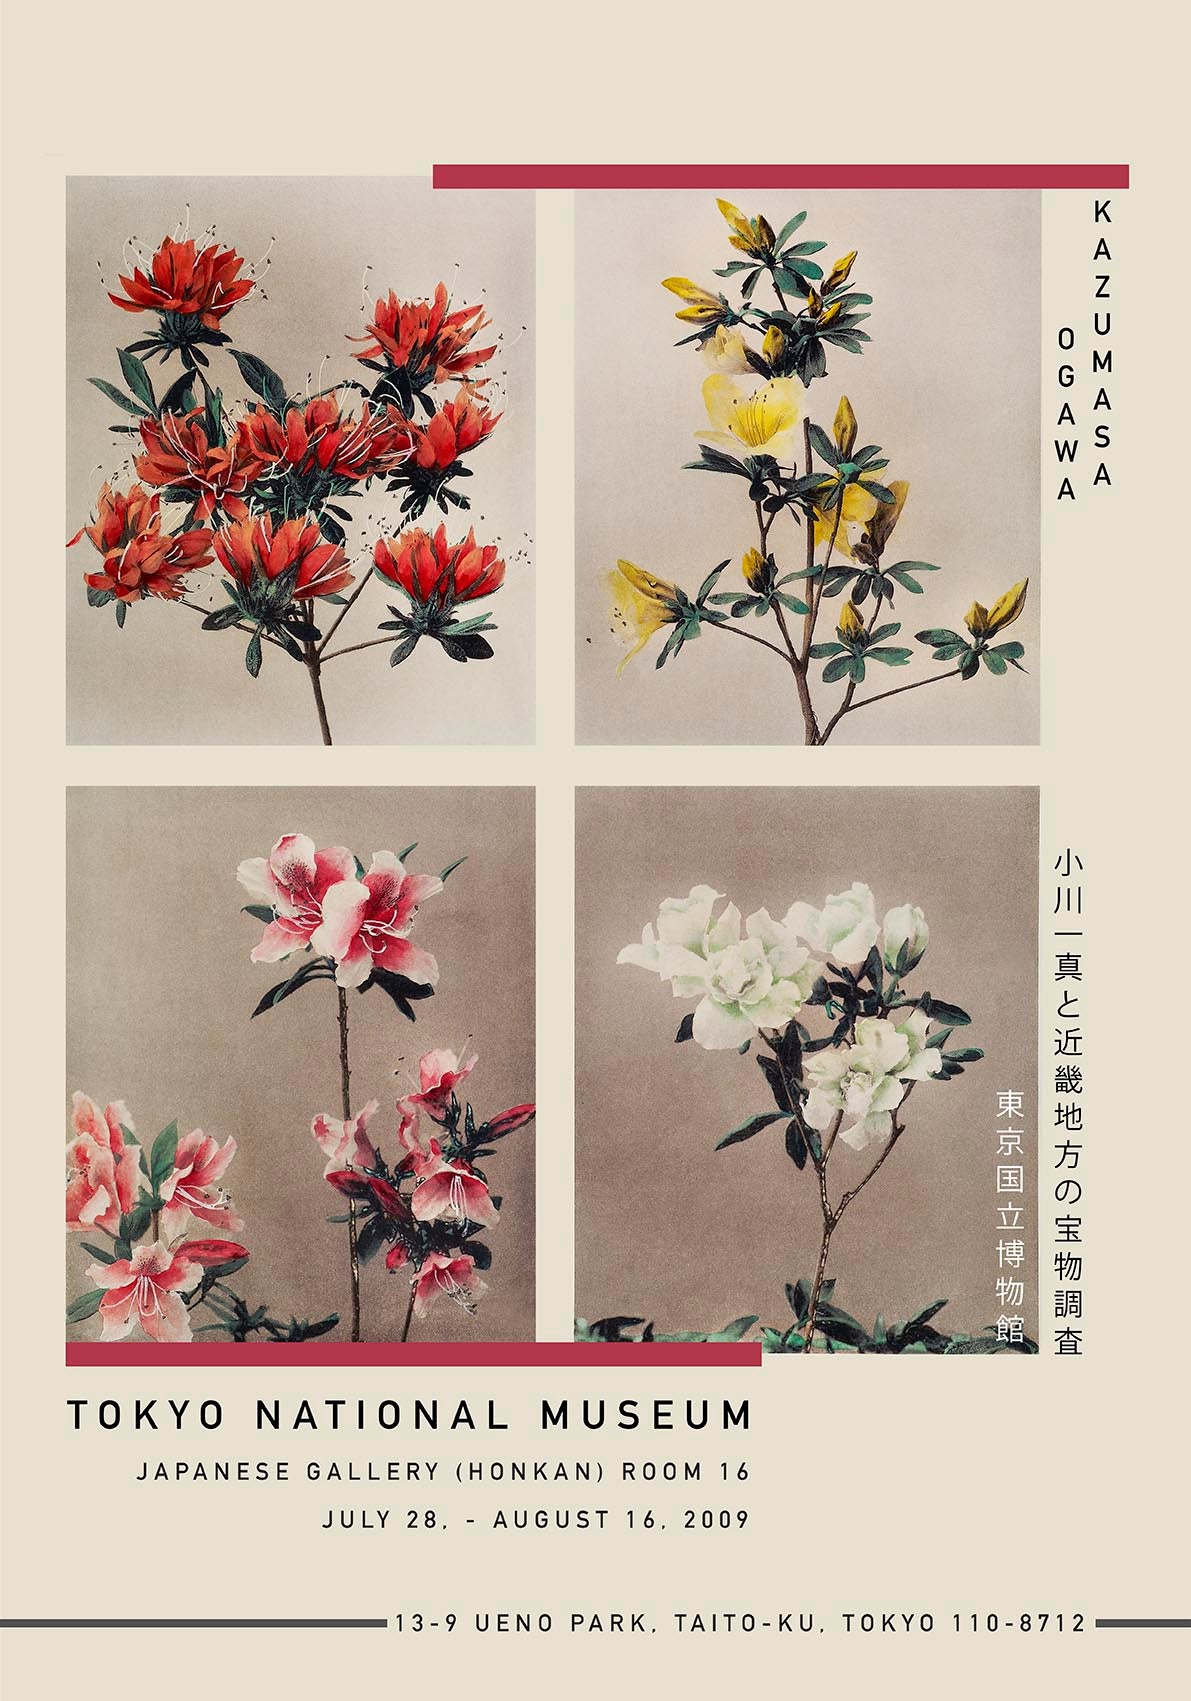 Group of Azaleas by Kazumasa Exhibition Poster